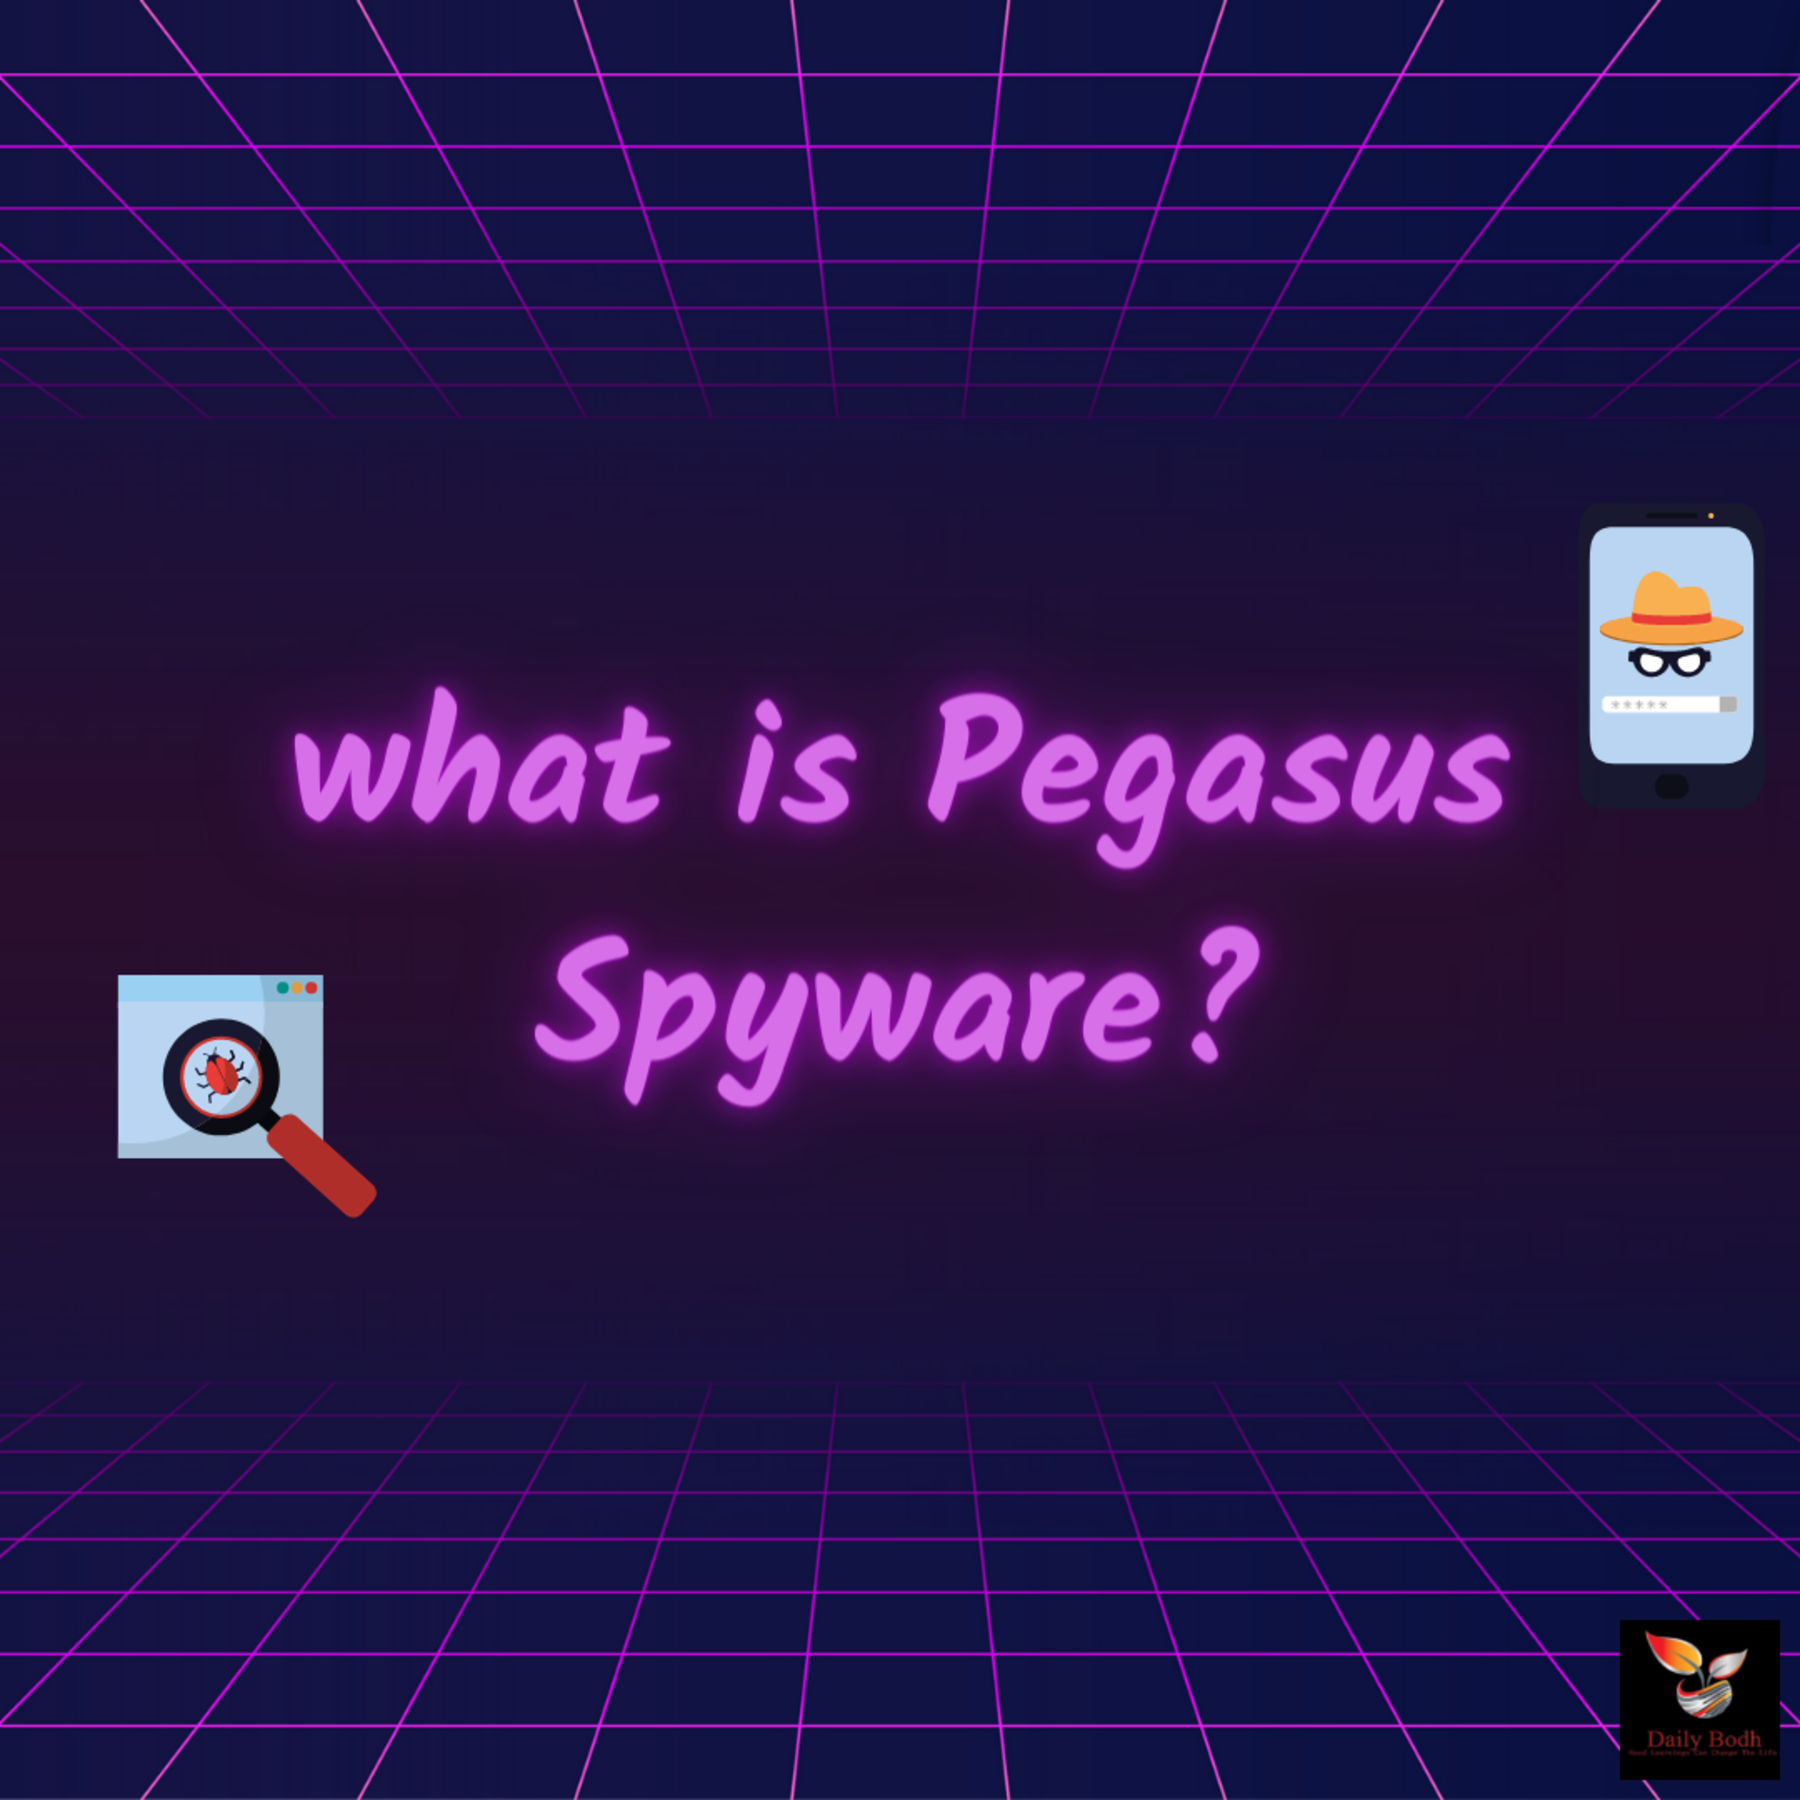 Pegasus Spyware?